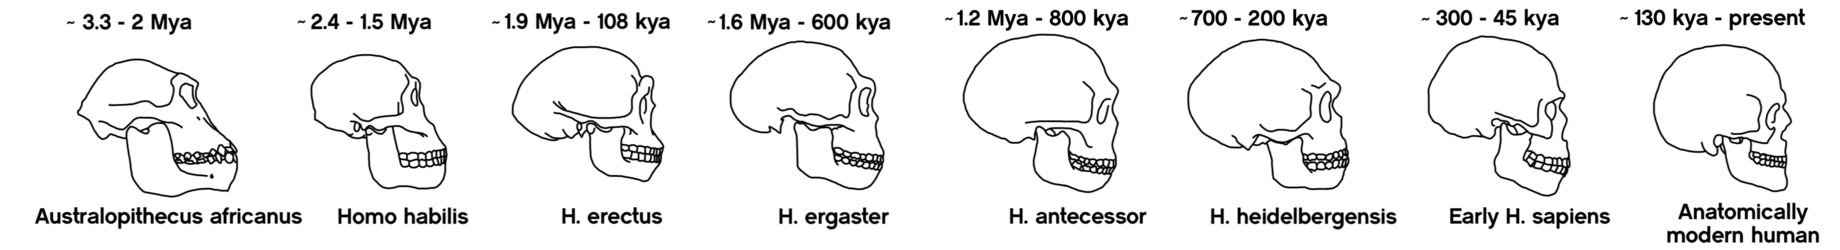 Skulls of successive (or near-successive, depending on the source) human evolutionary ancestors,[c] up until 'modern' Homo sapiens * Mya – million years ago, kya – thousand years ago